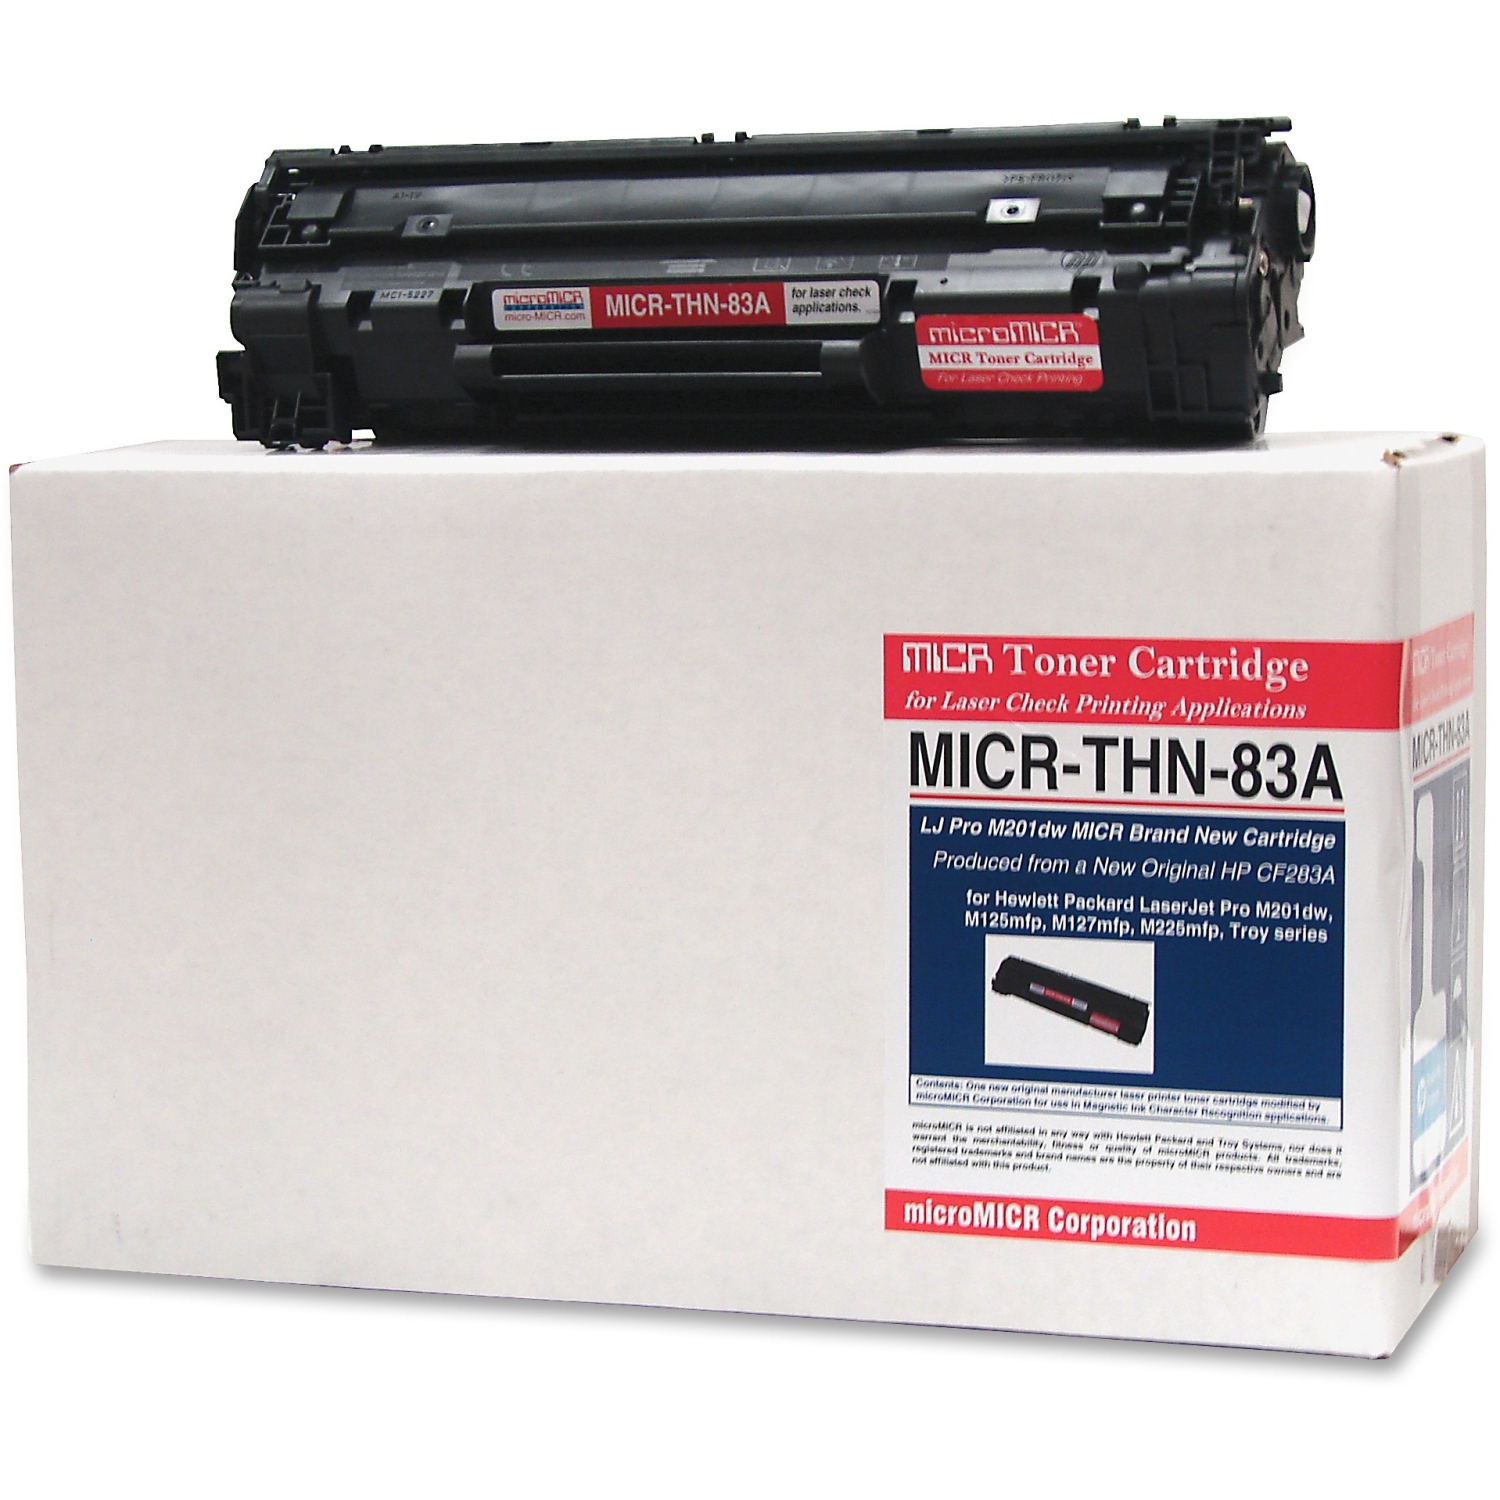 Micromicr MICR Toner Cartridge - Alternative for HP (83A)